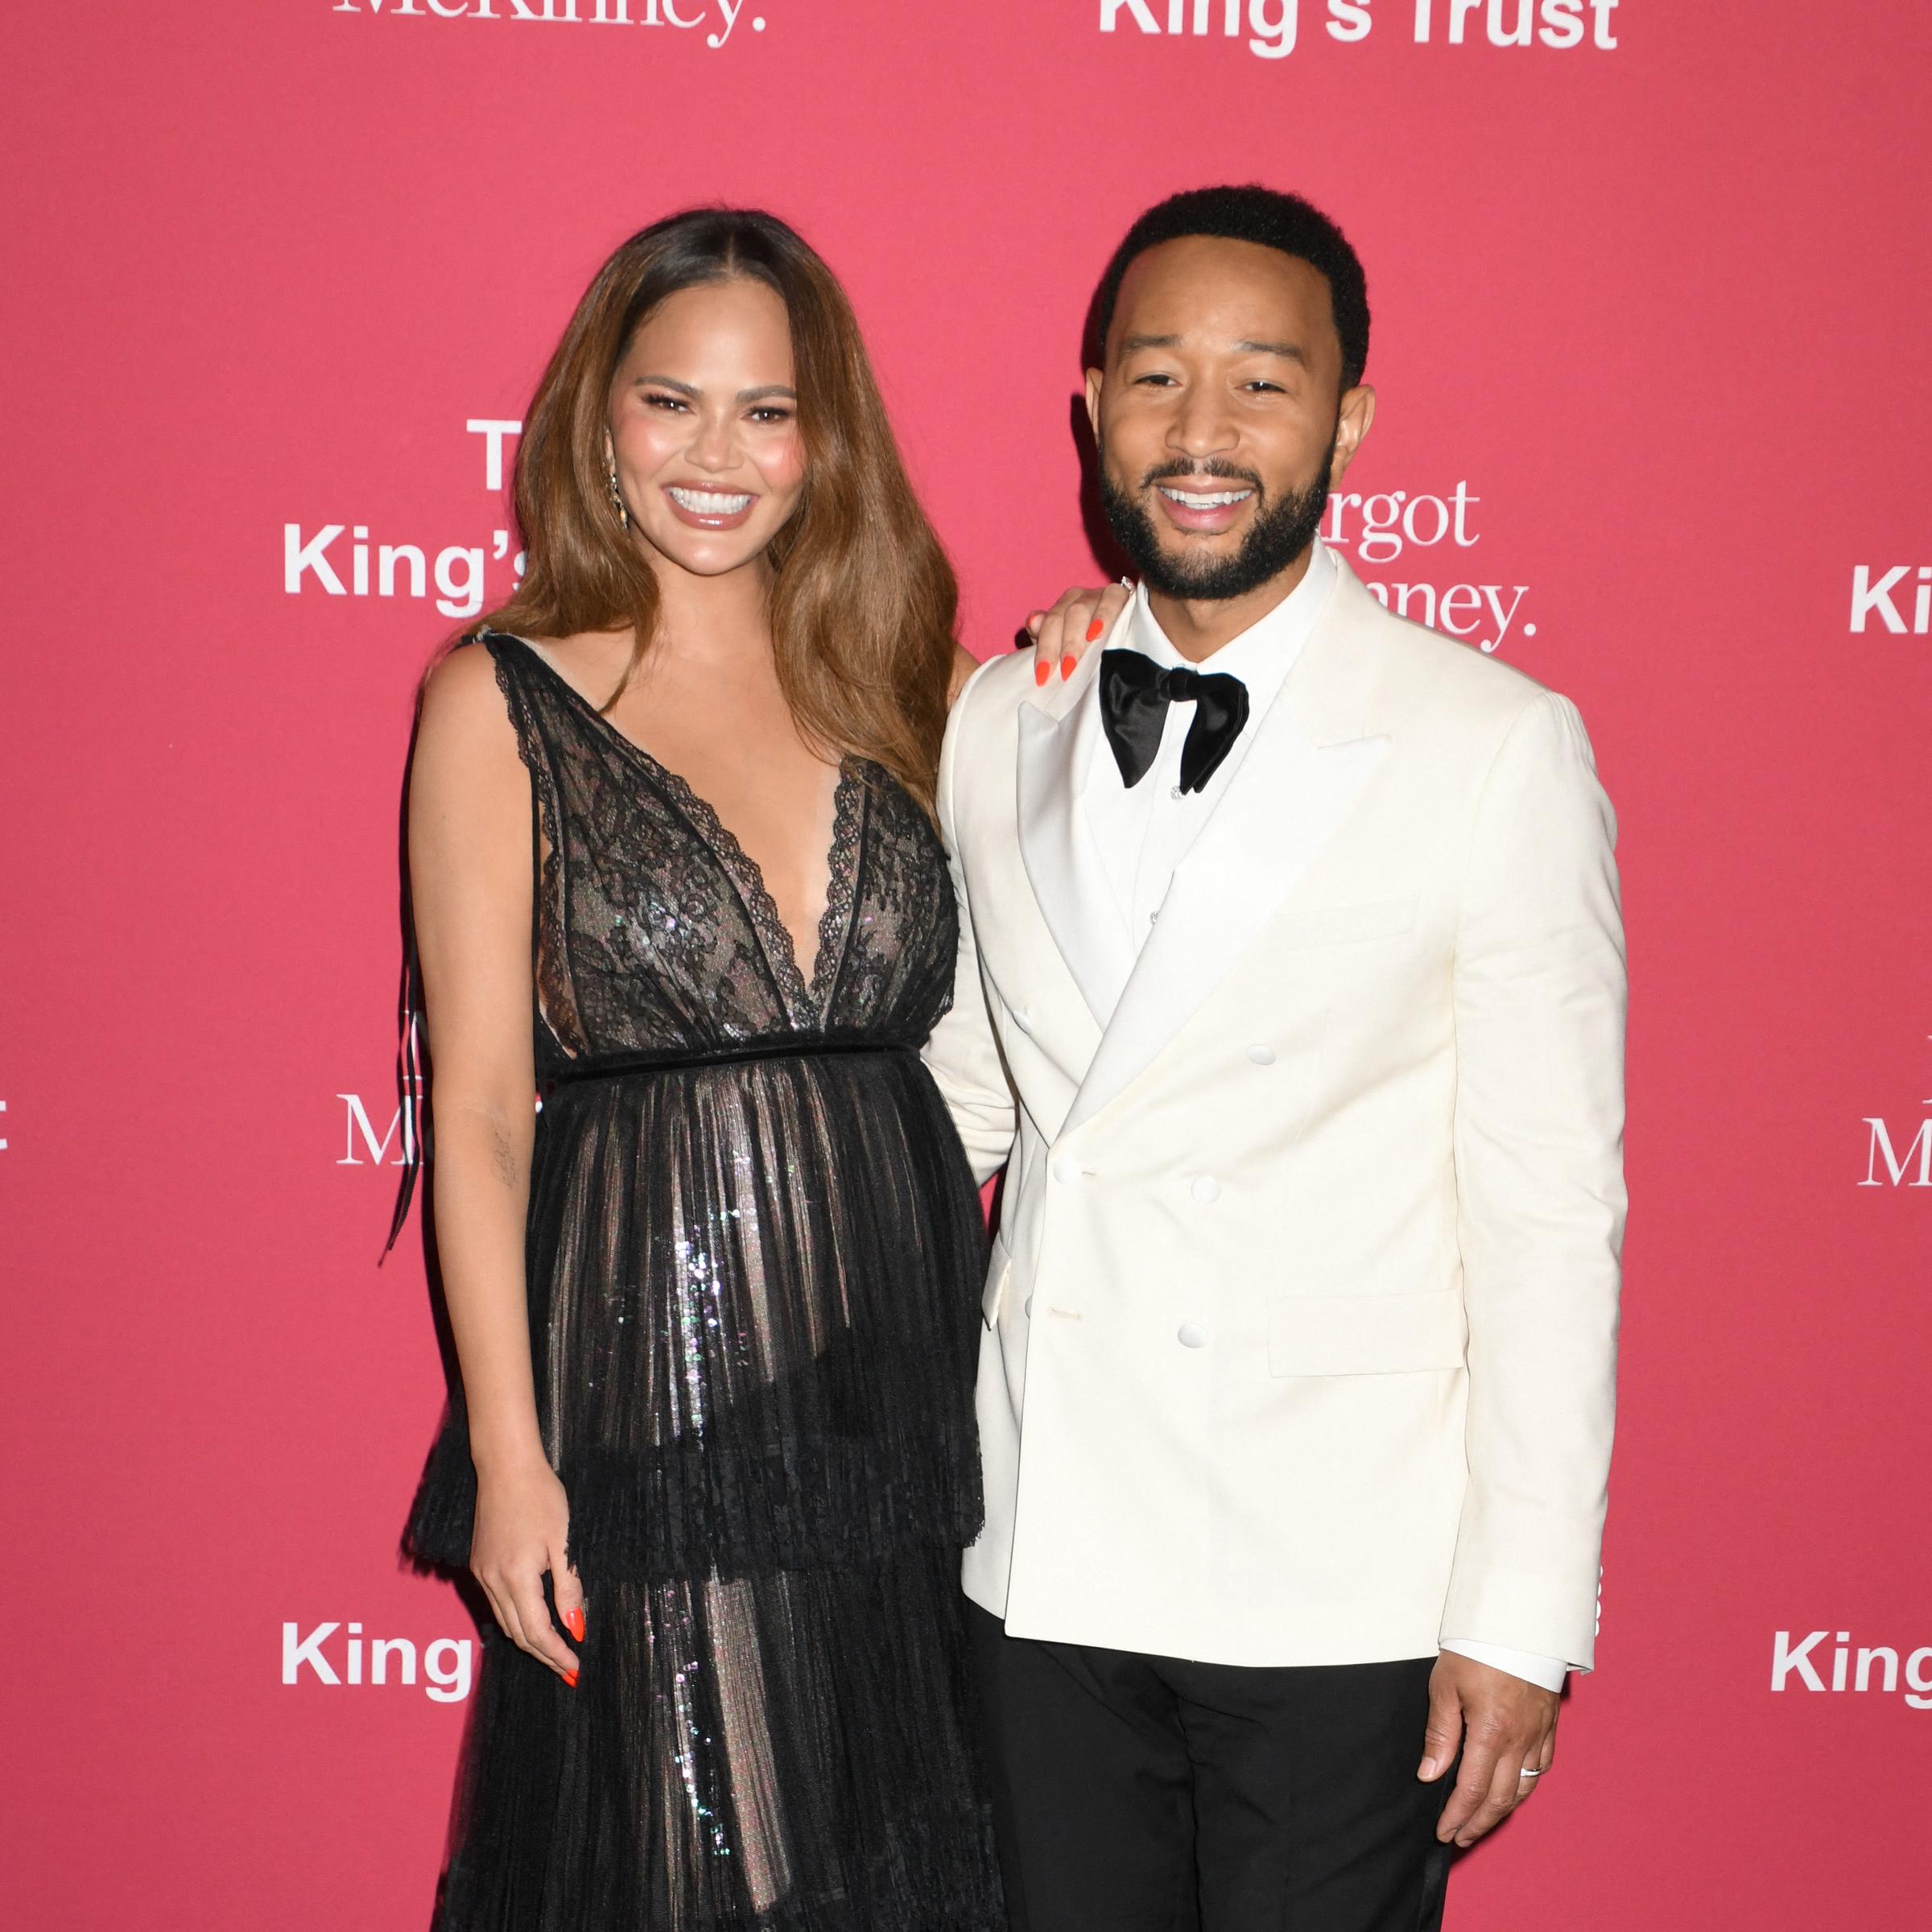 Chrissy Teigen and John Legend at Kings Trust Gala in NYC